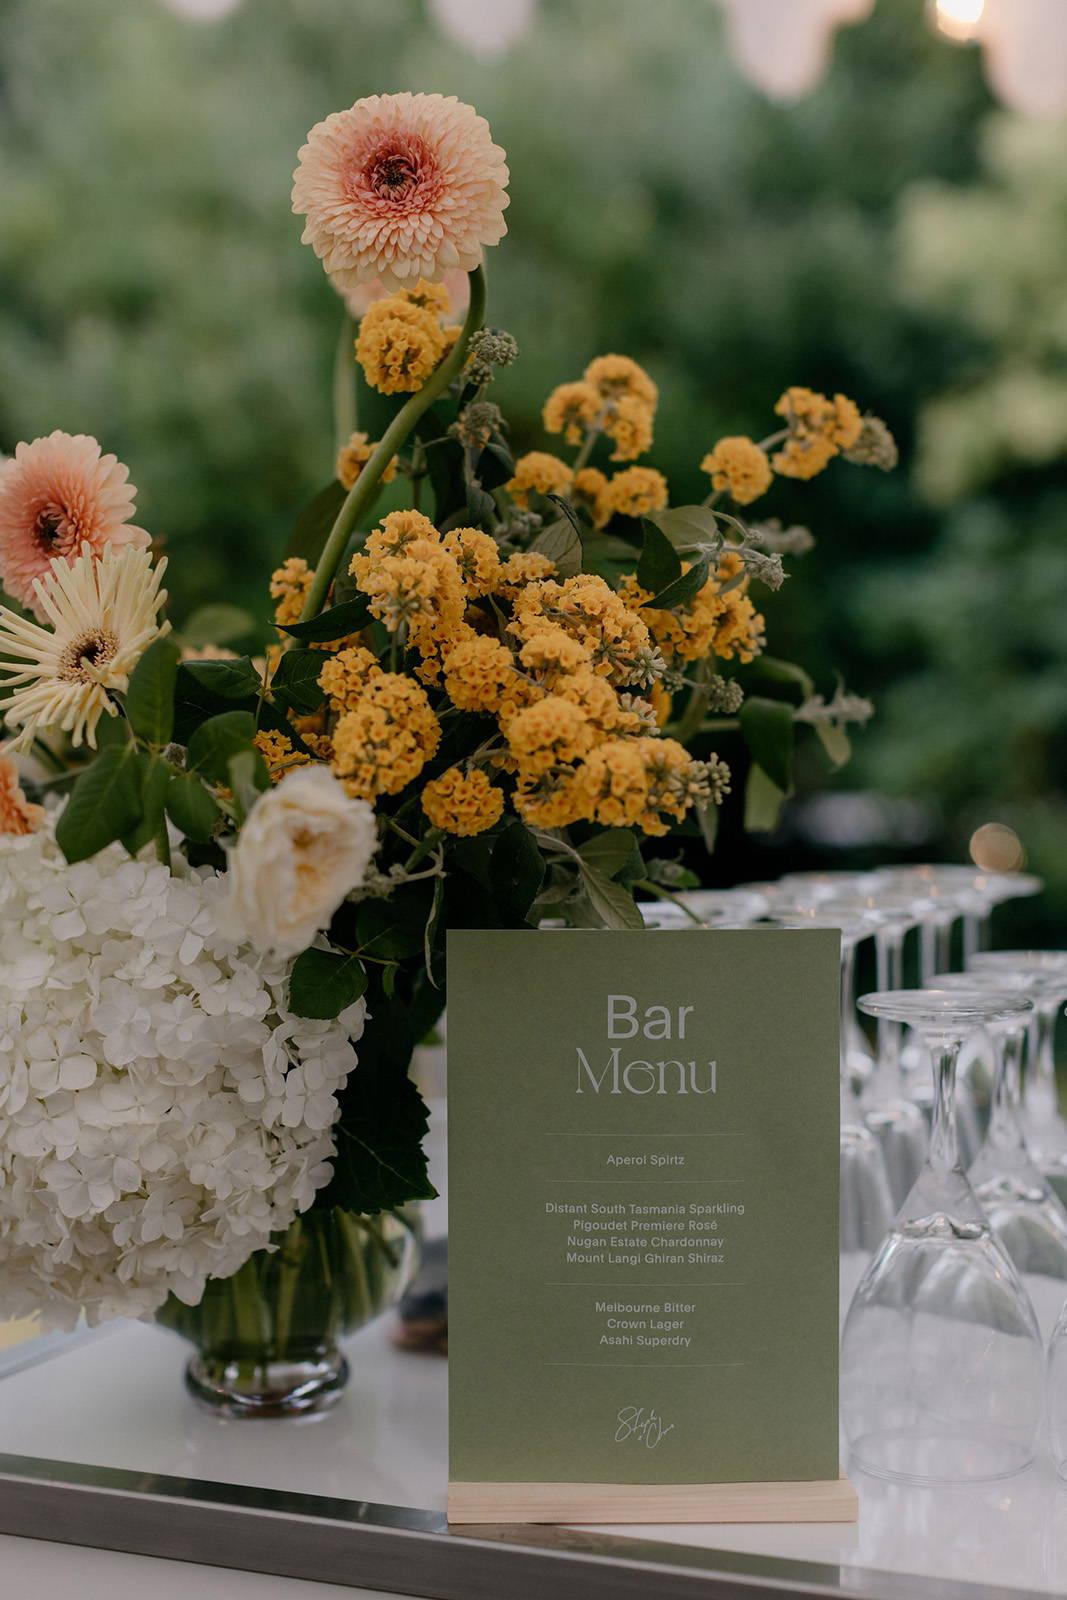 Wedding bar menu and flowers